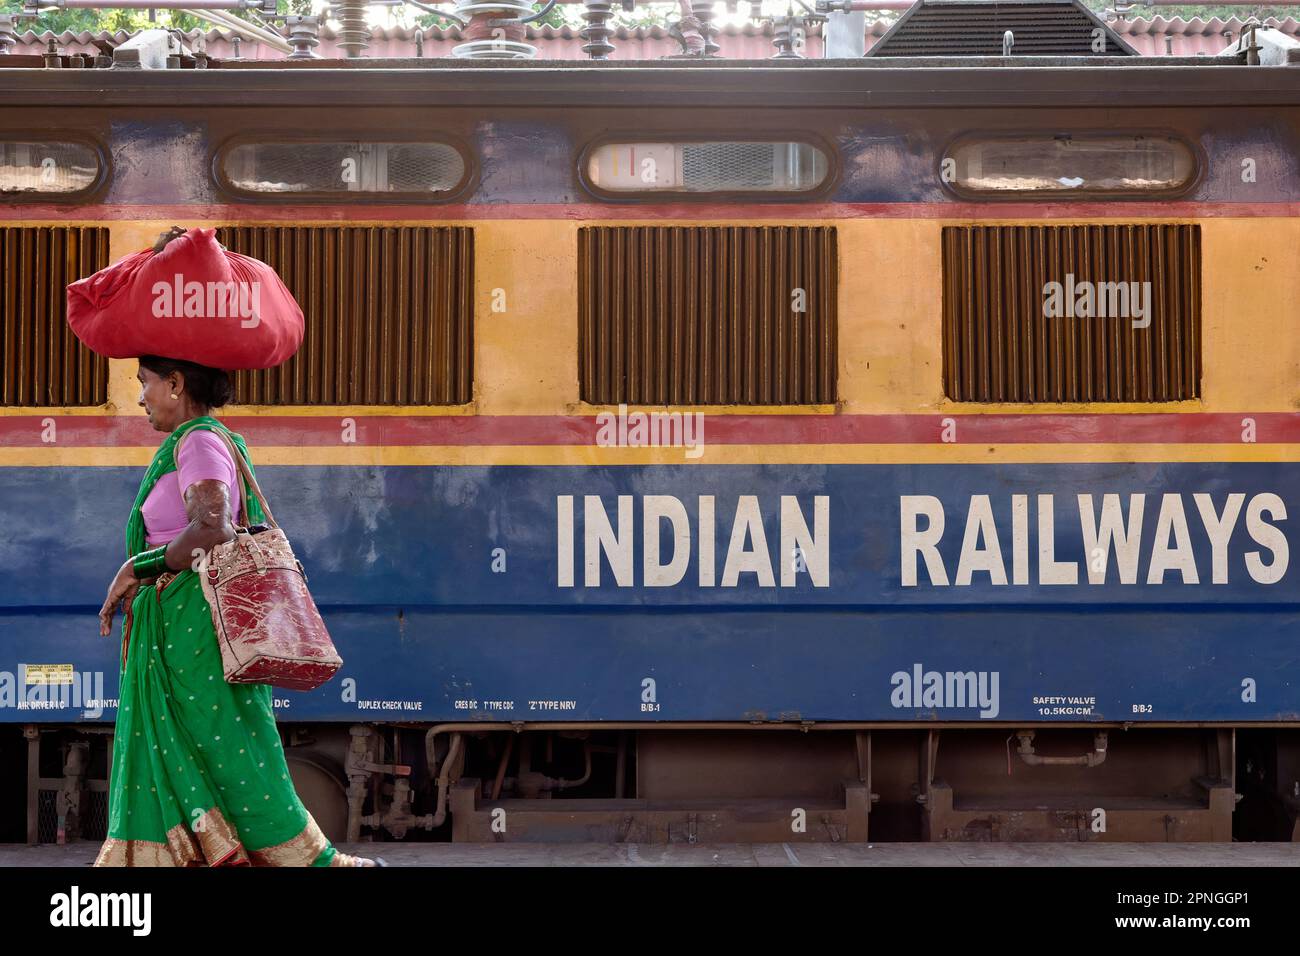 An Indian woman carrying a bundle of clothes on her head passes an Indian Railways train carriage; Chhatrapati Shivaji Maharaj Terminus, Mumbai, India Stock Photo